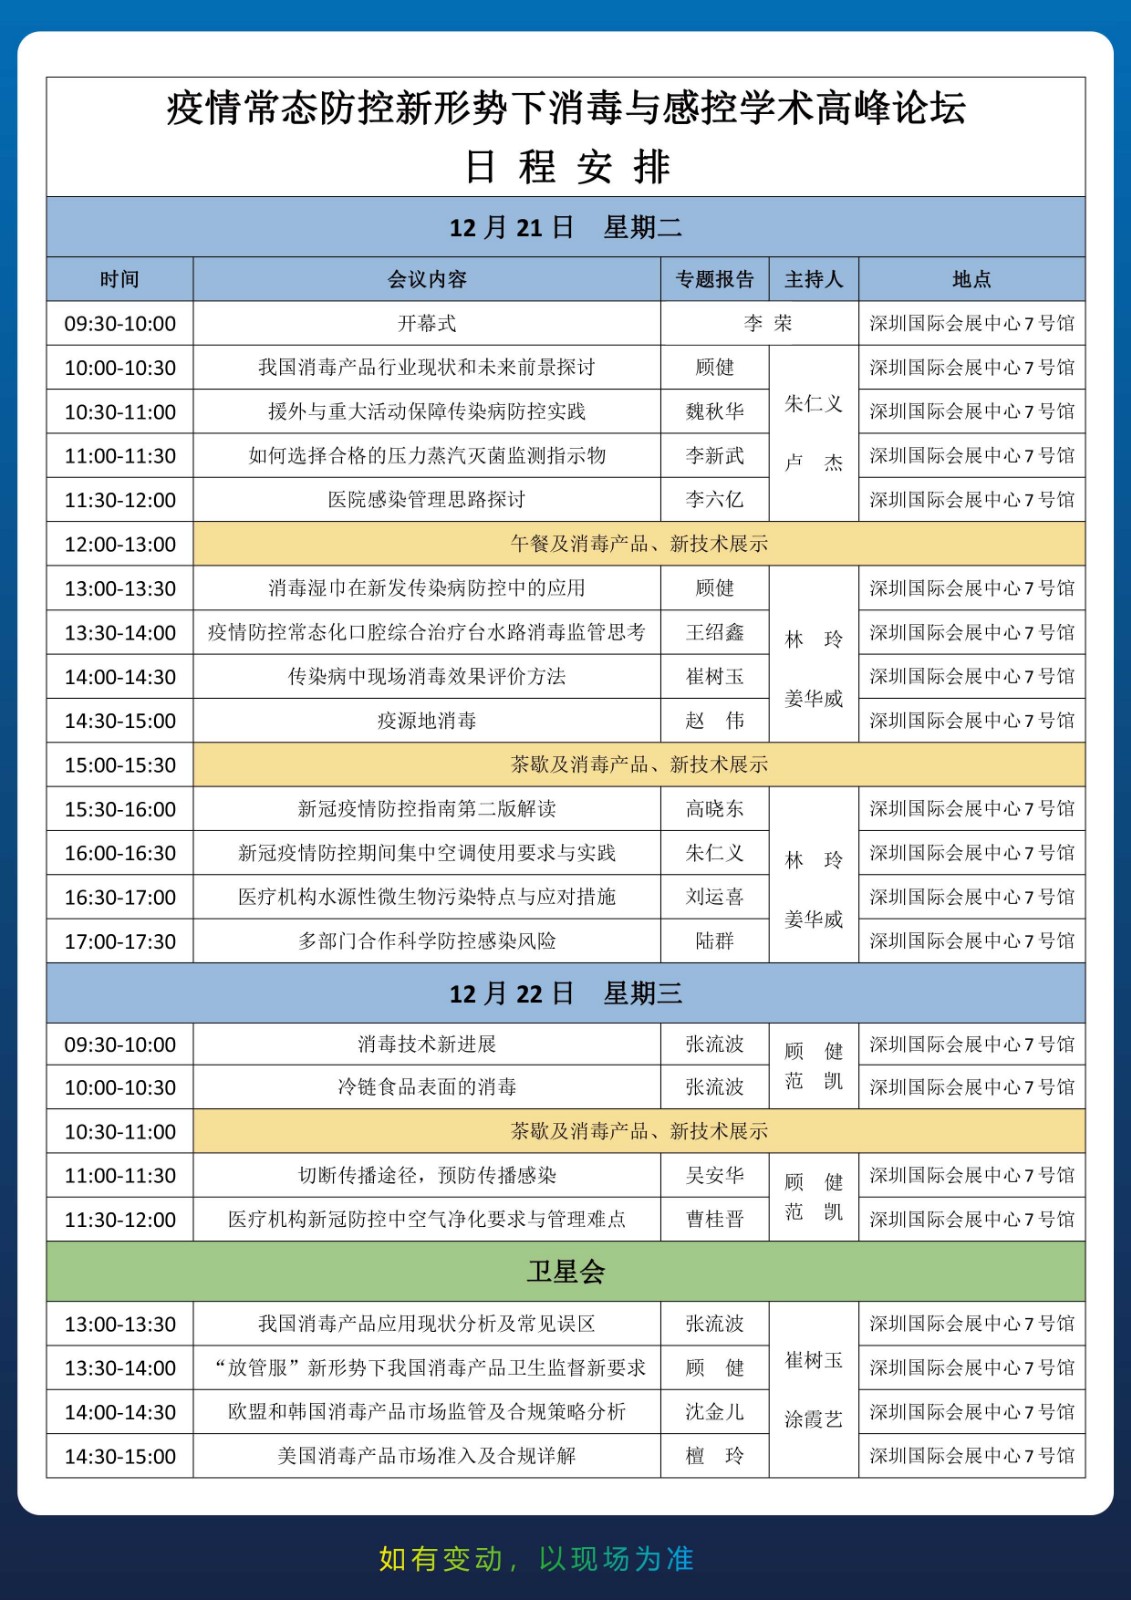 MDIC2021深圳国际医用消毒及感控设备展览会会议日程